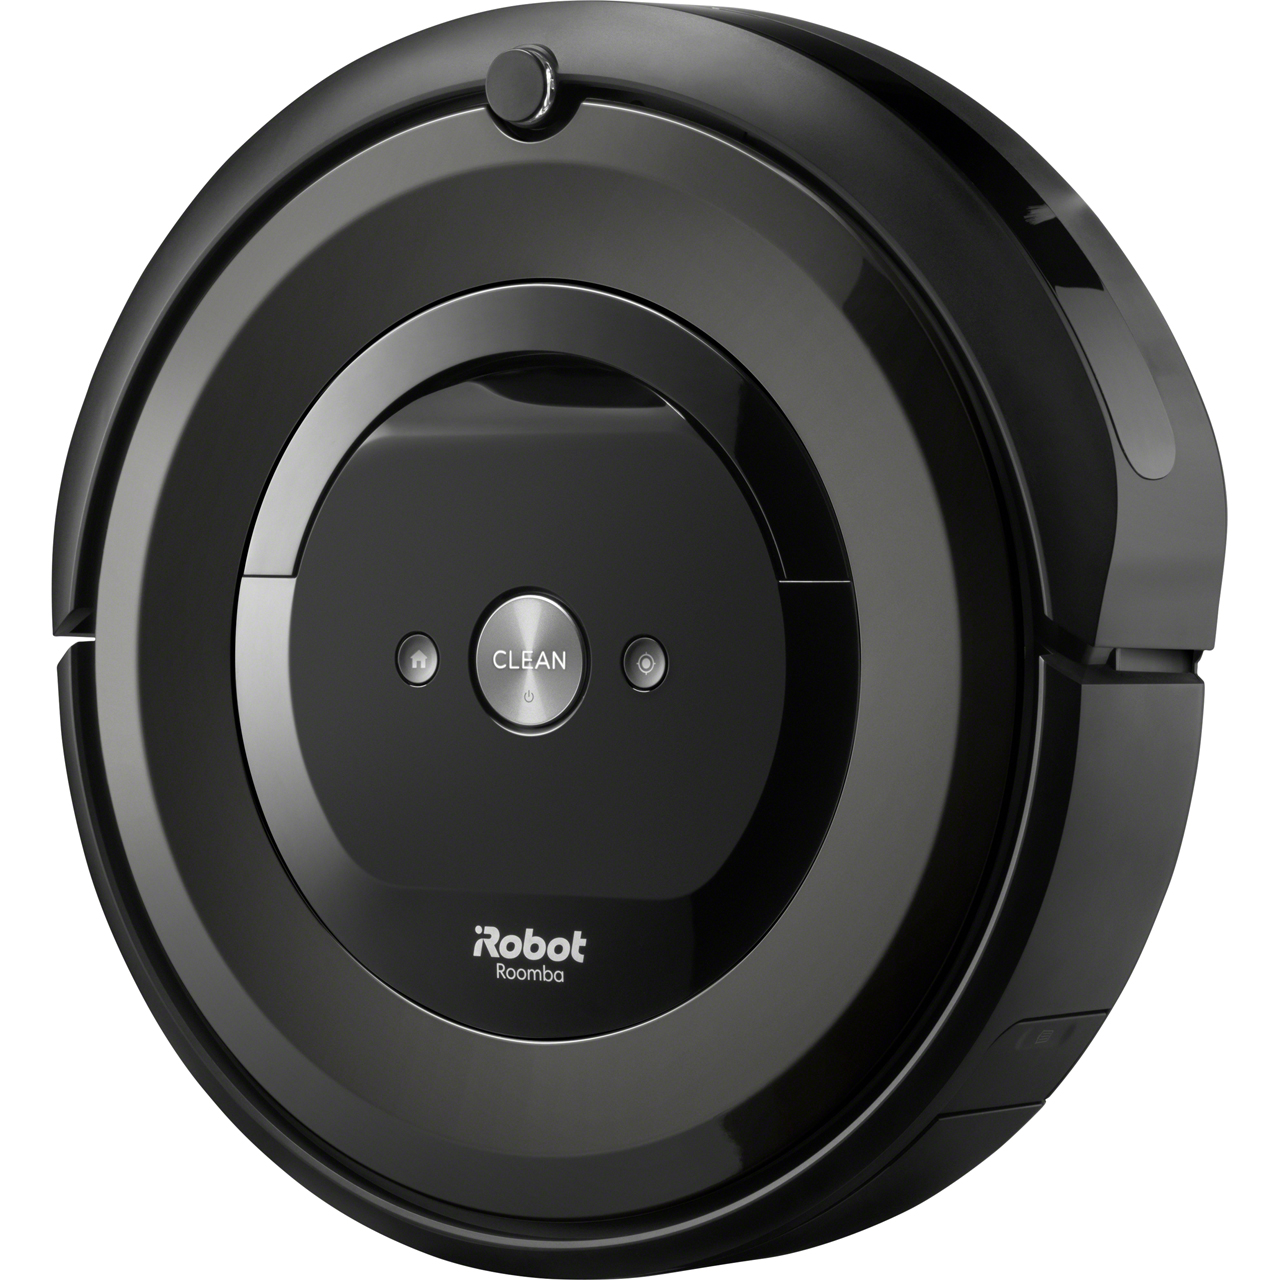 iRobot Roomba E5158 Robotic Vacuum Cleaner Review